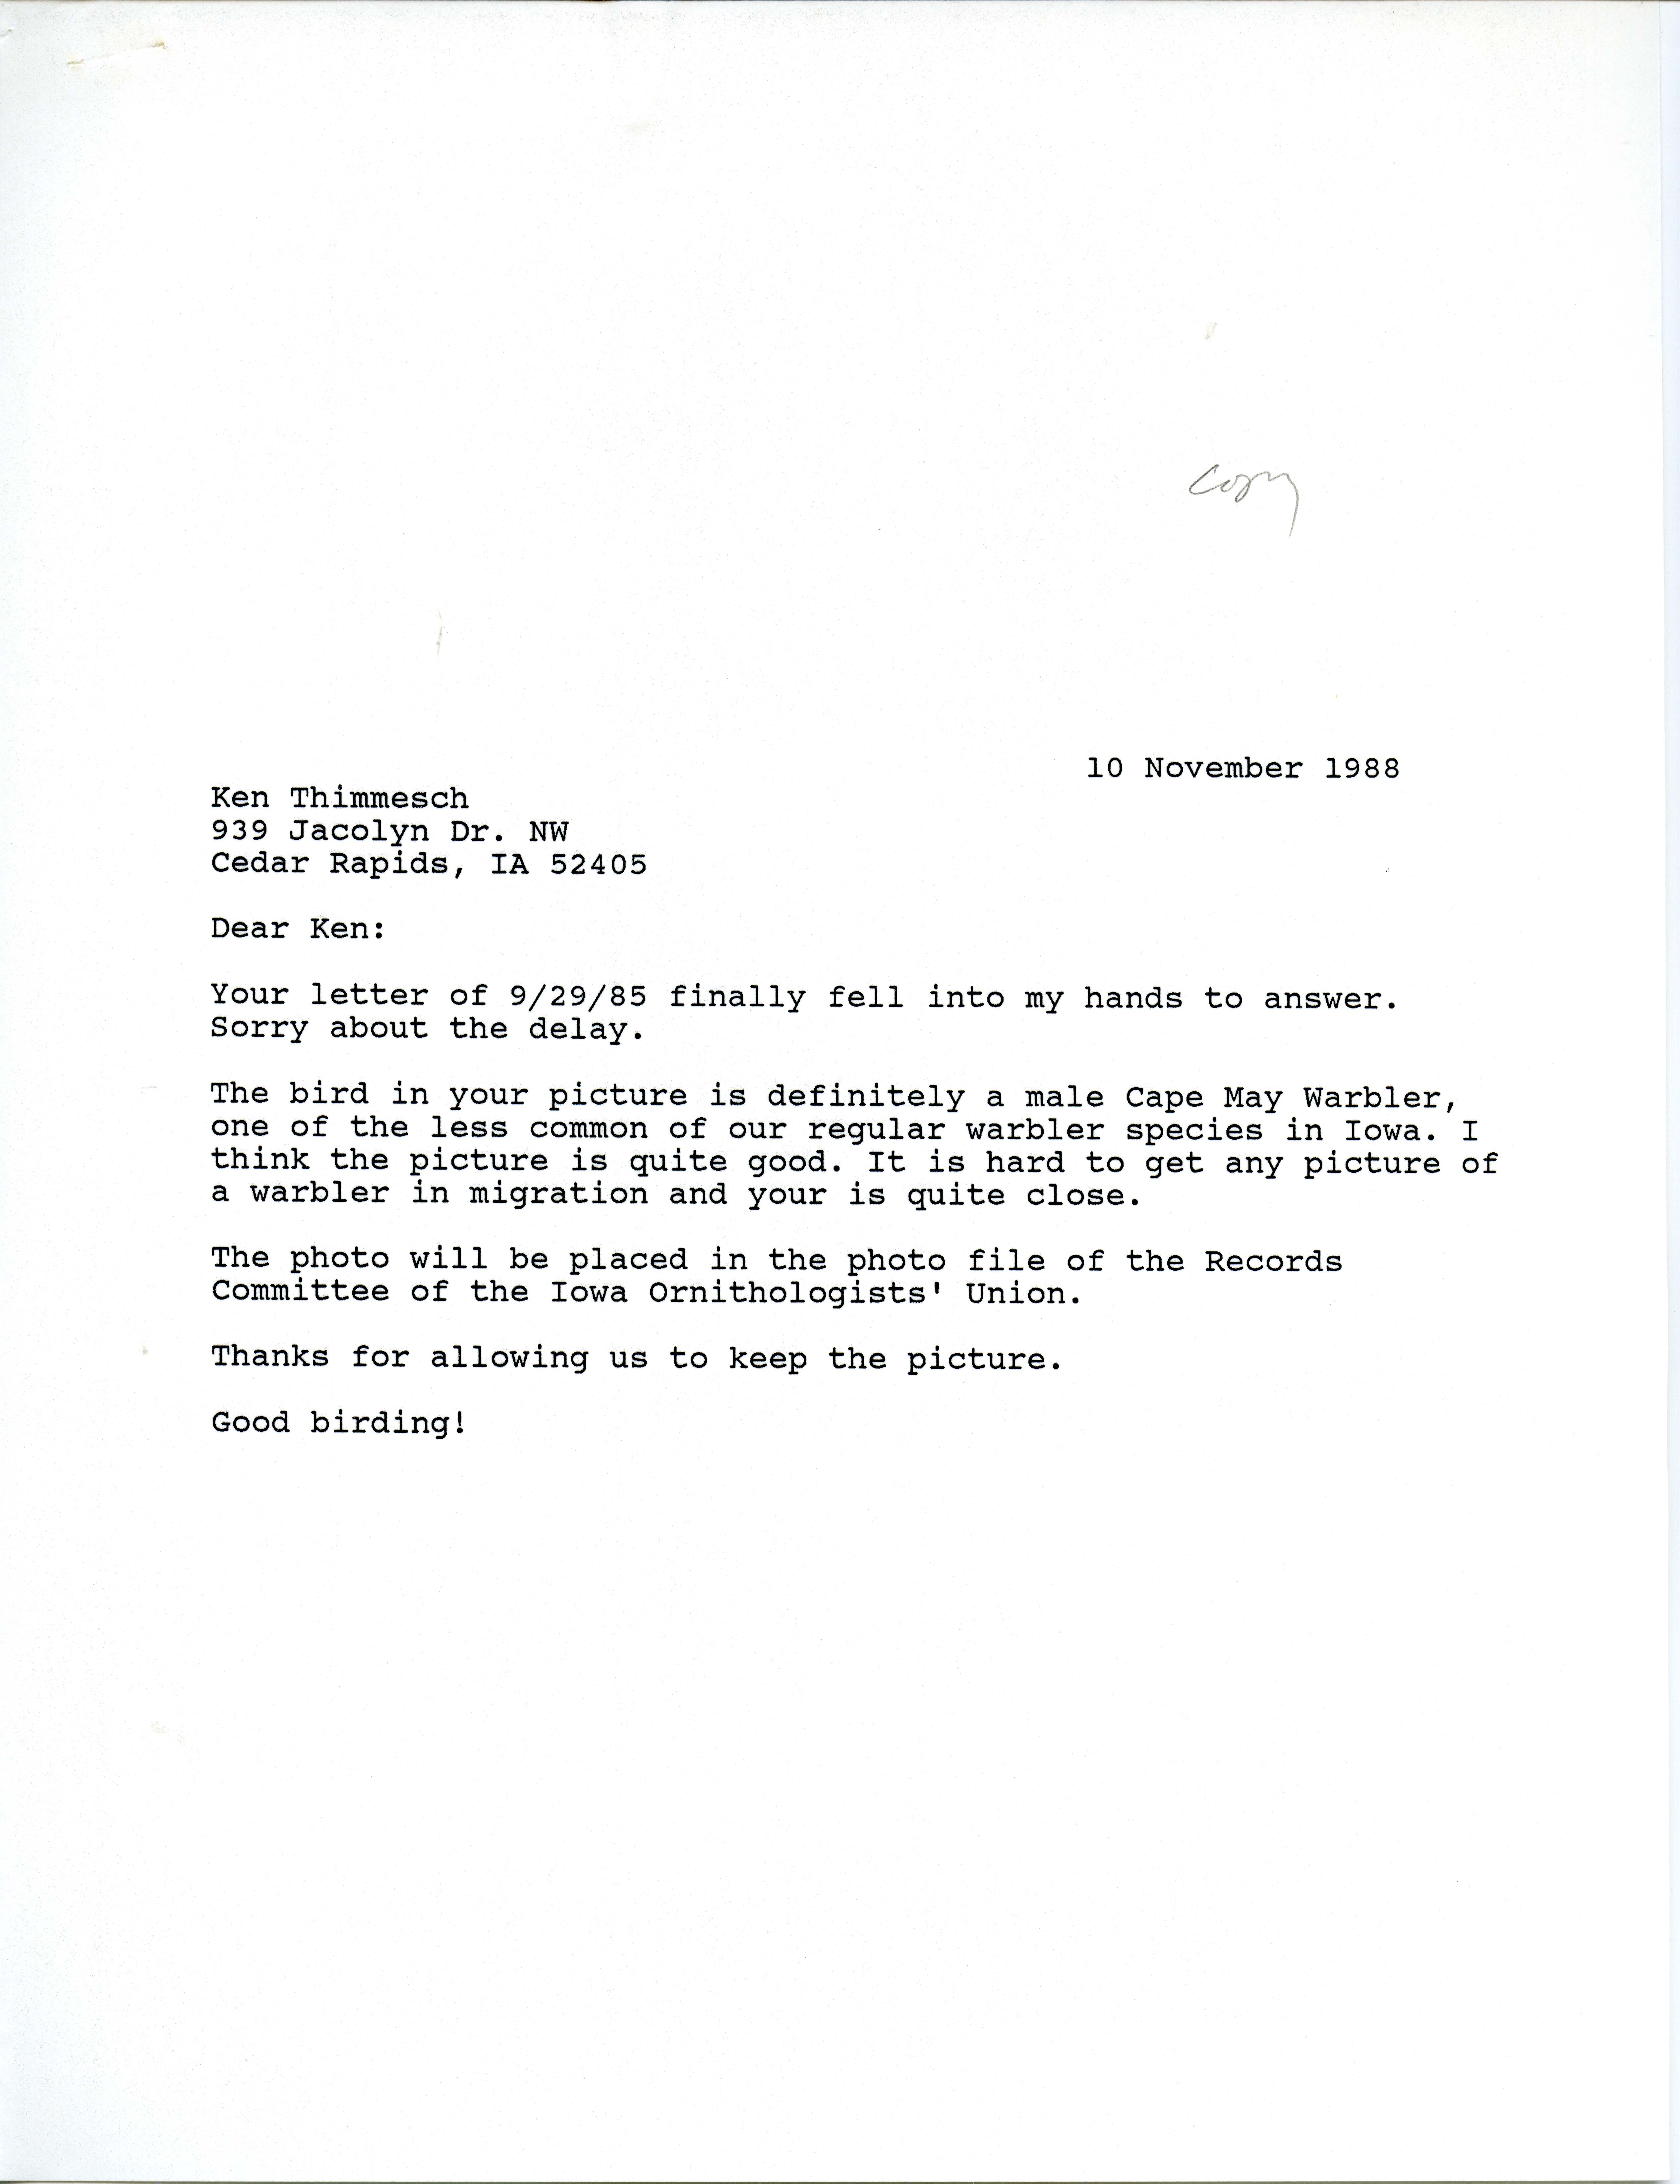 Iowa Ornithologists Union letter to Ken Thimmesch regarding Warbler photograph, November 10, 1988